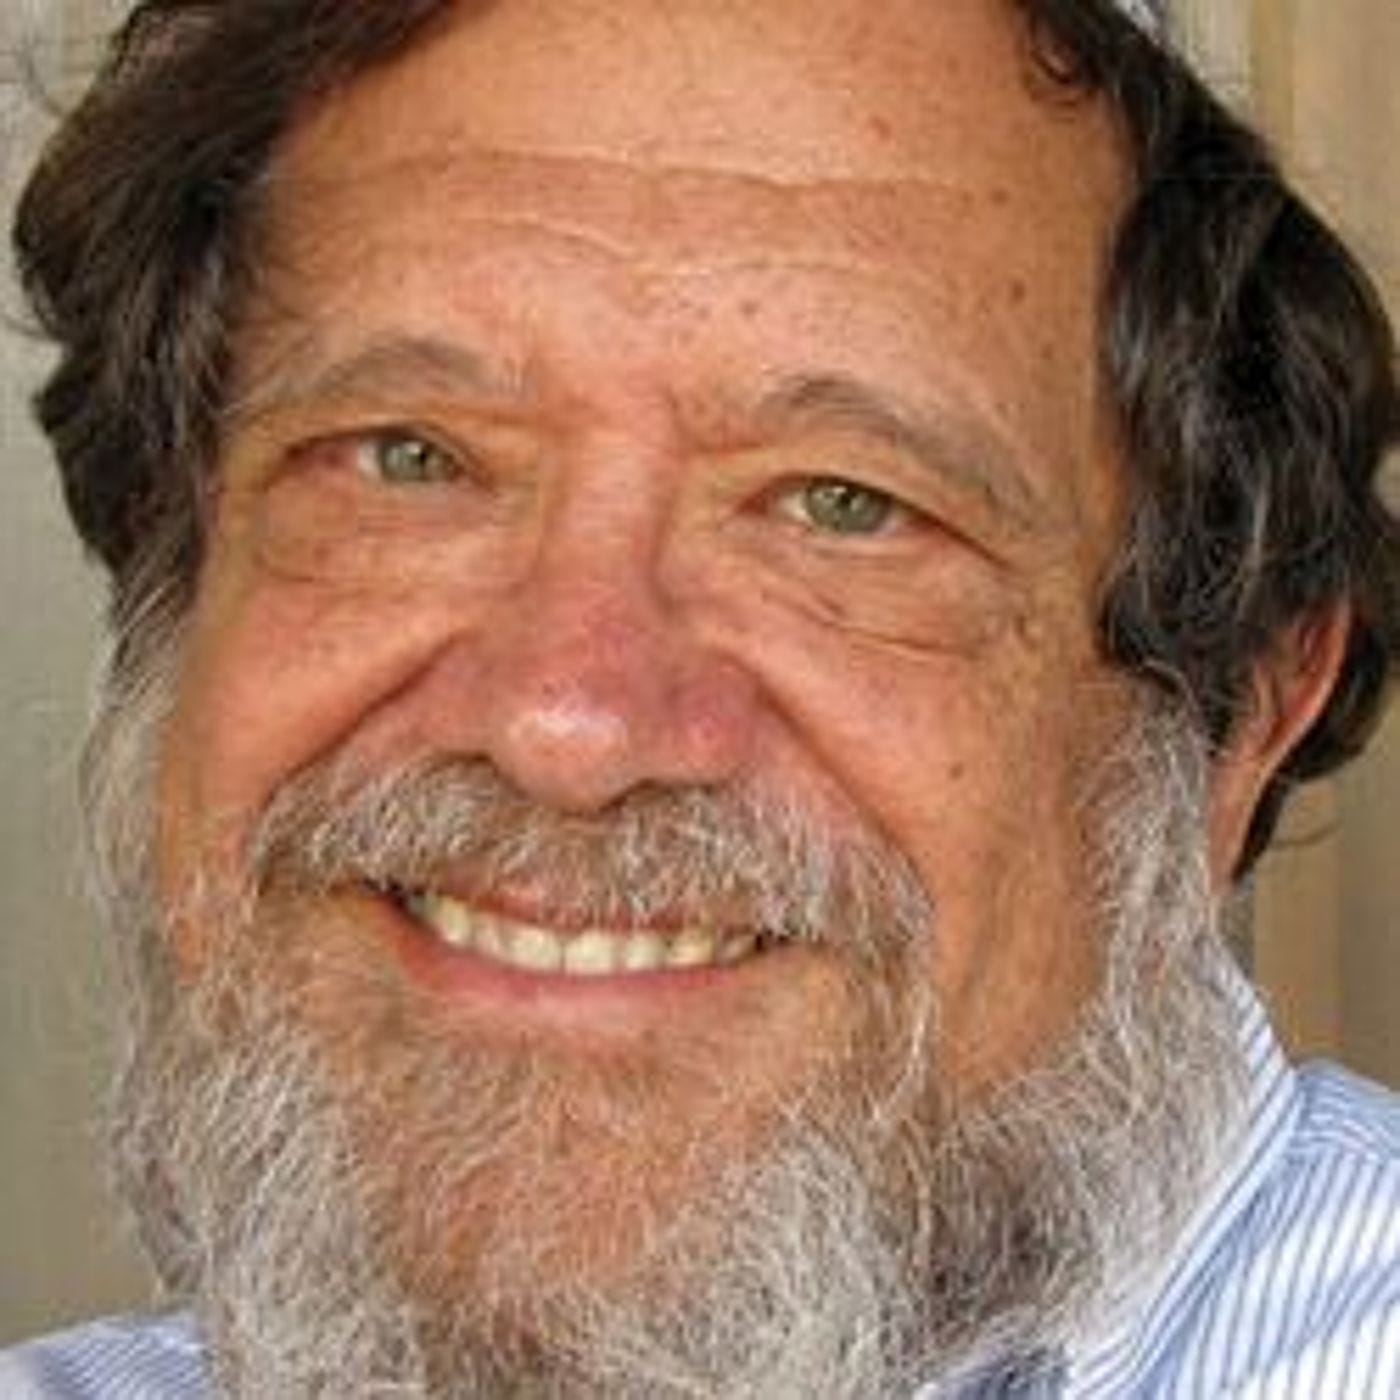 Dr. Michael Lerner, Rabbi, Clinical Psychologist, Activist and Creator of Tikkun Magazine